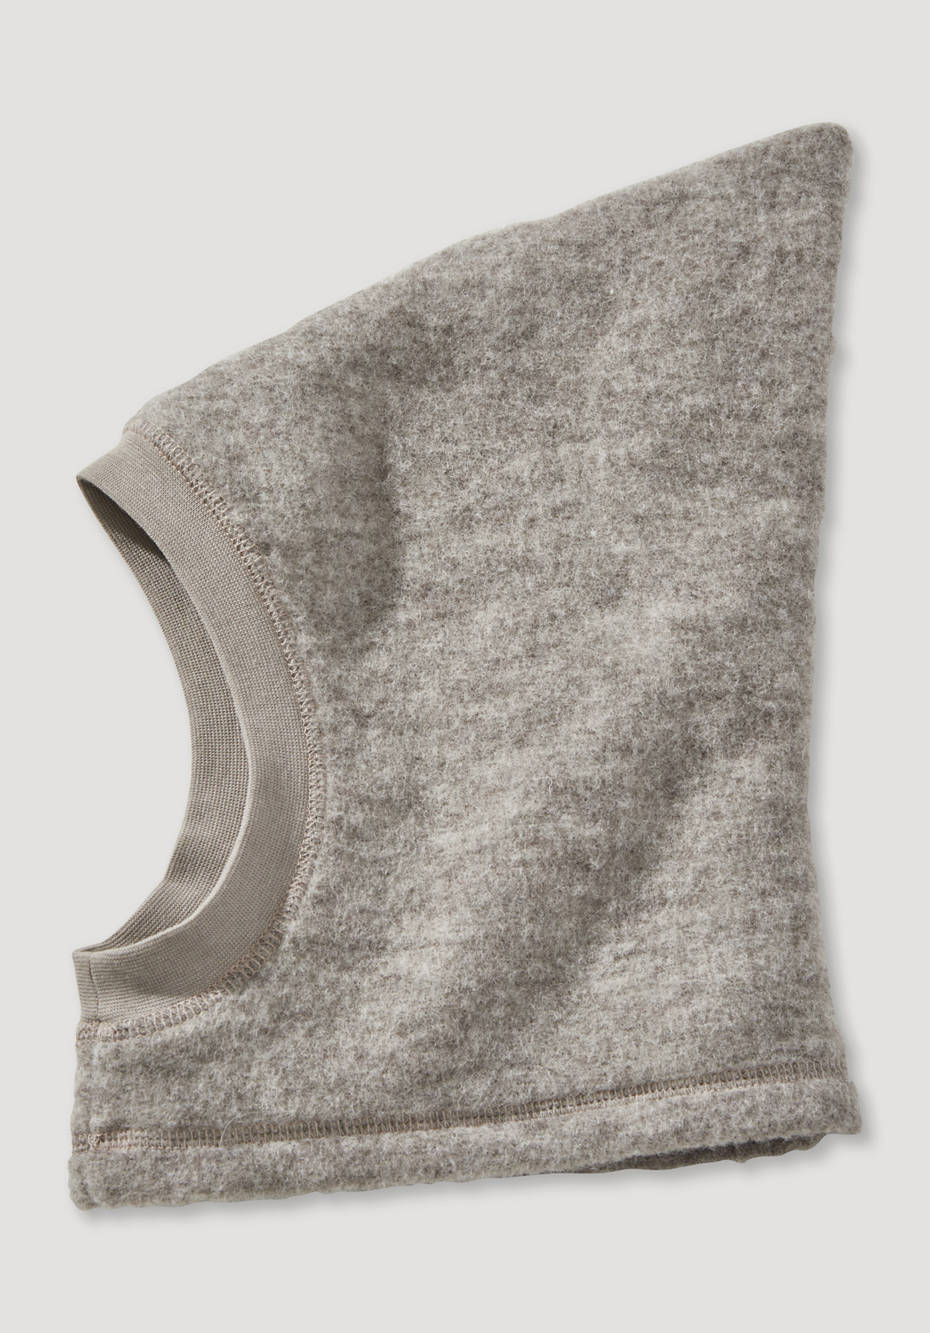 Wool fleece hat made from pure organic merino wool